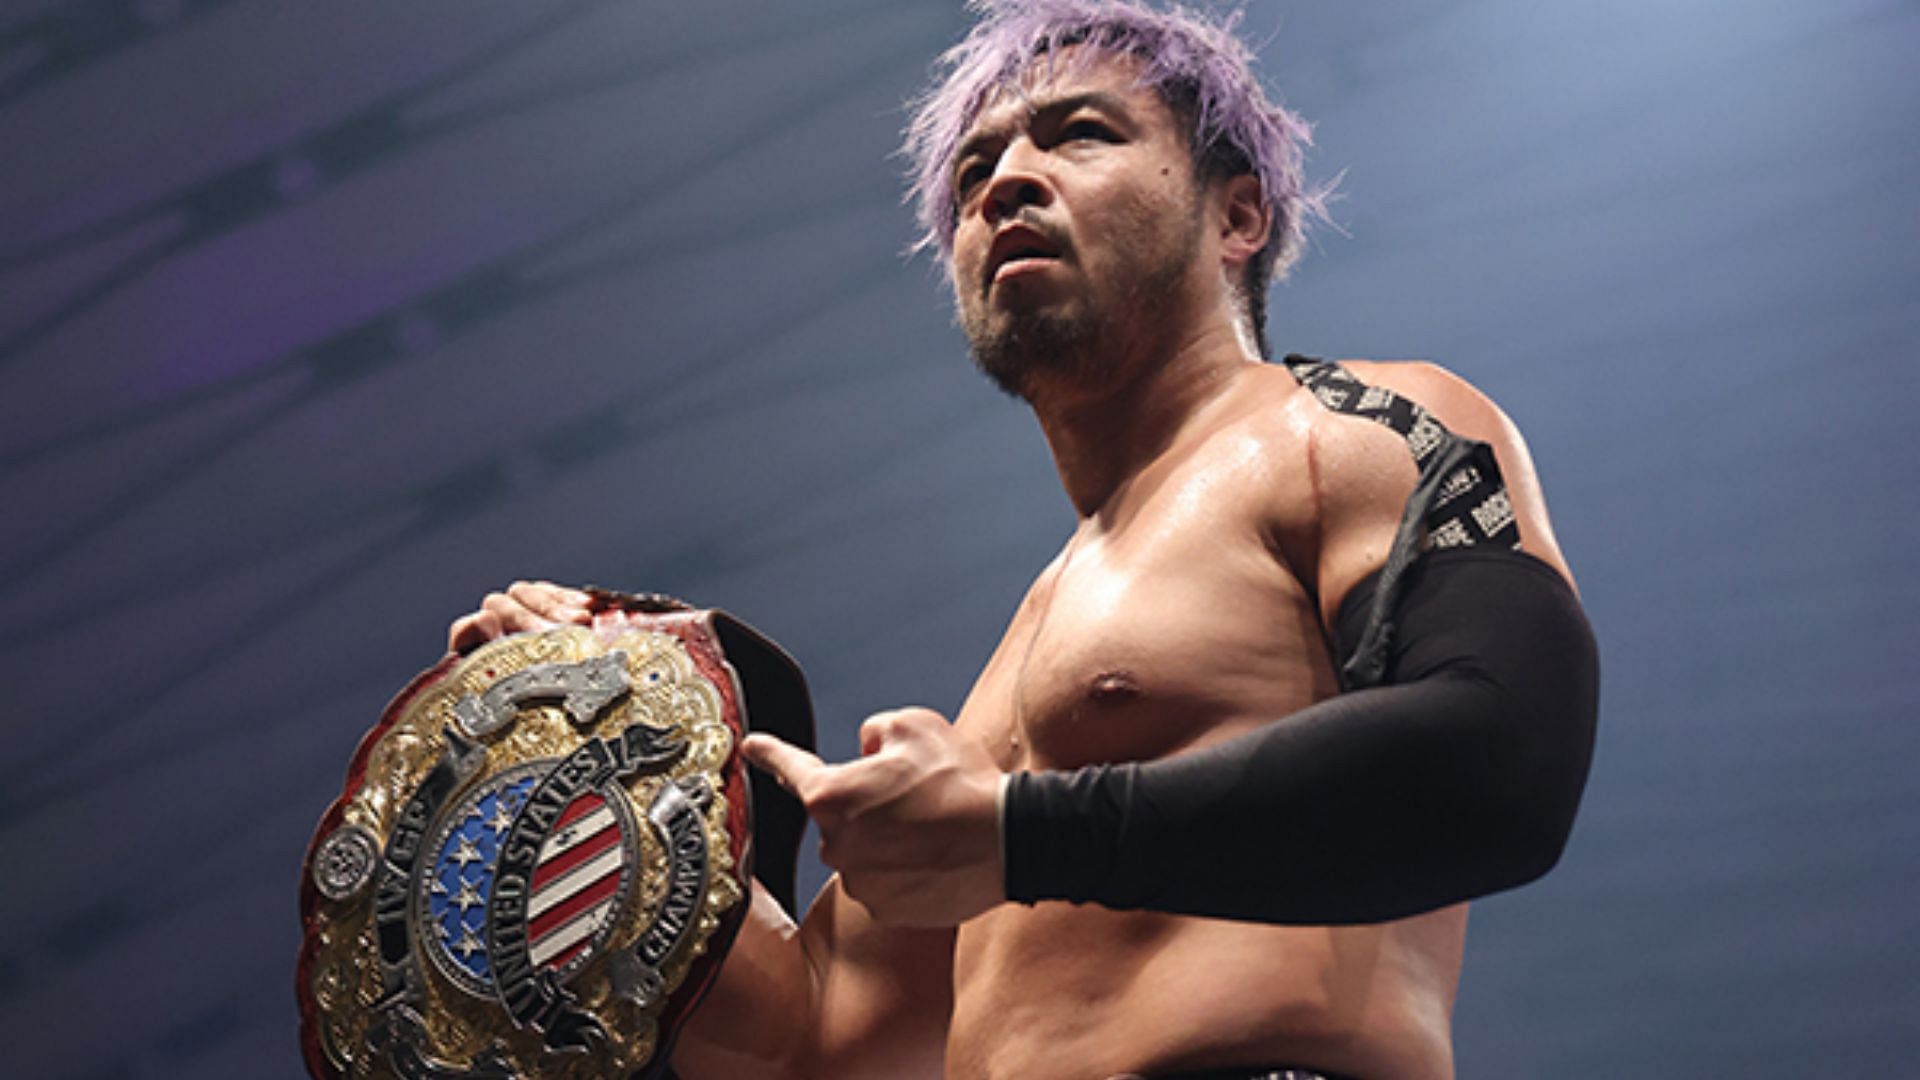 KENTA has won the IWGP United States Heavyweight Championship at NJPW Power Struggle